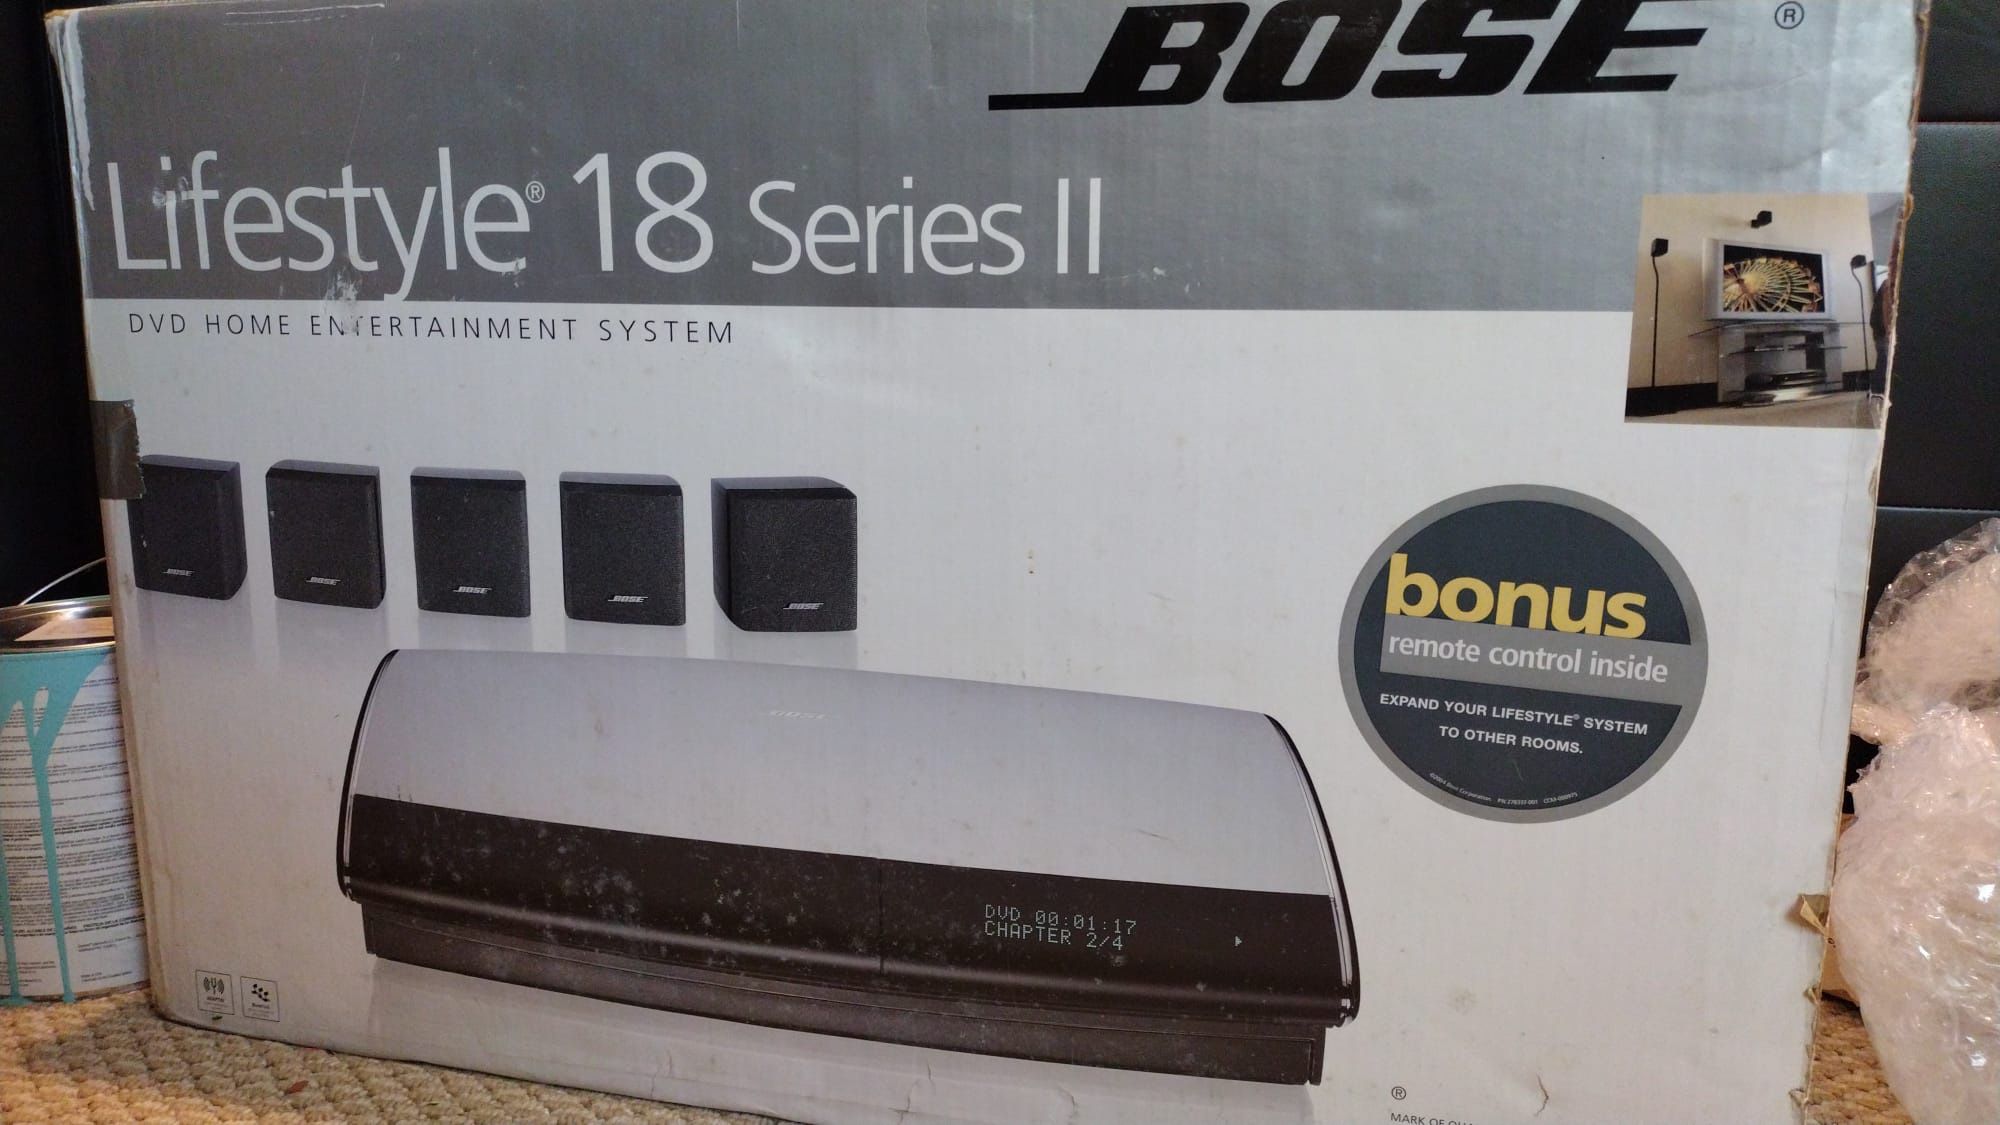 Bose Lifestyle 18 Series IIa